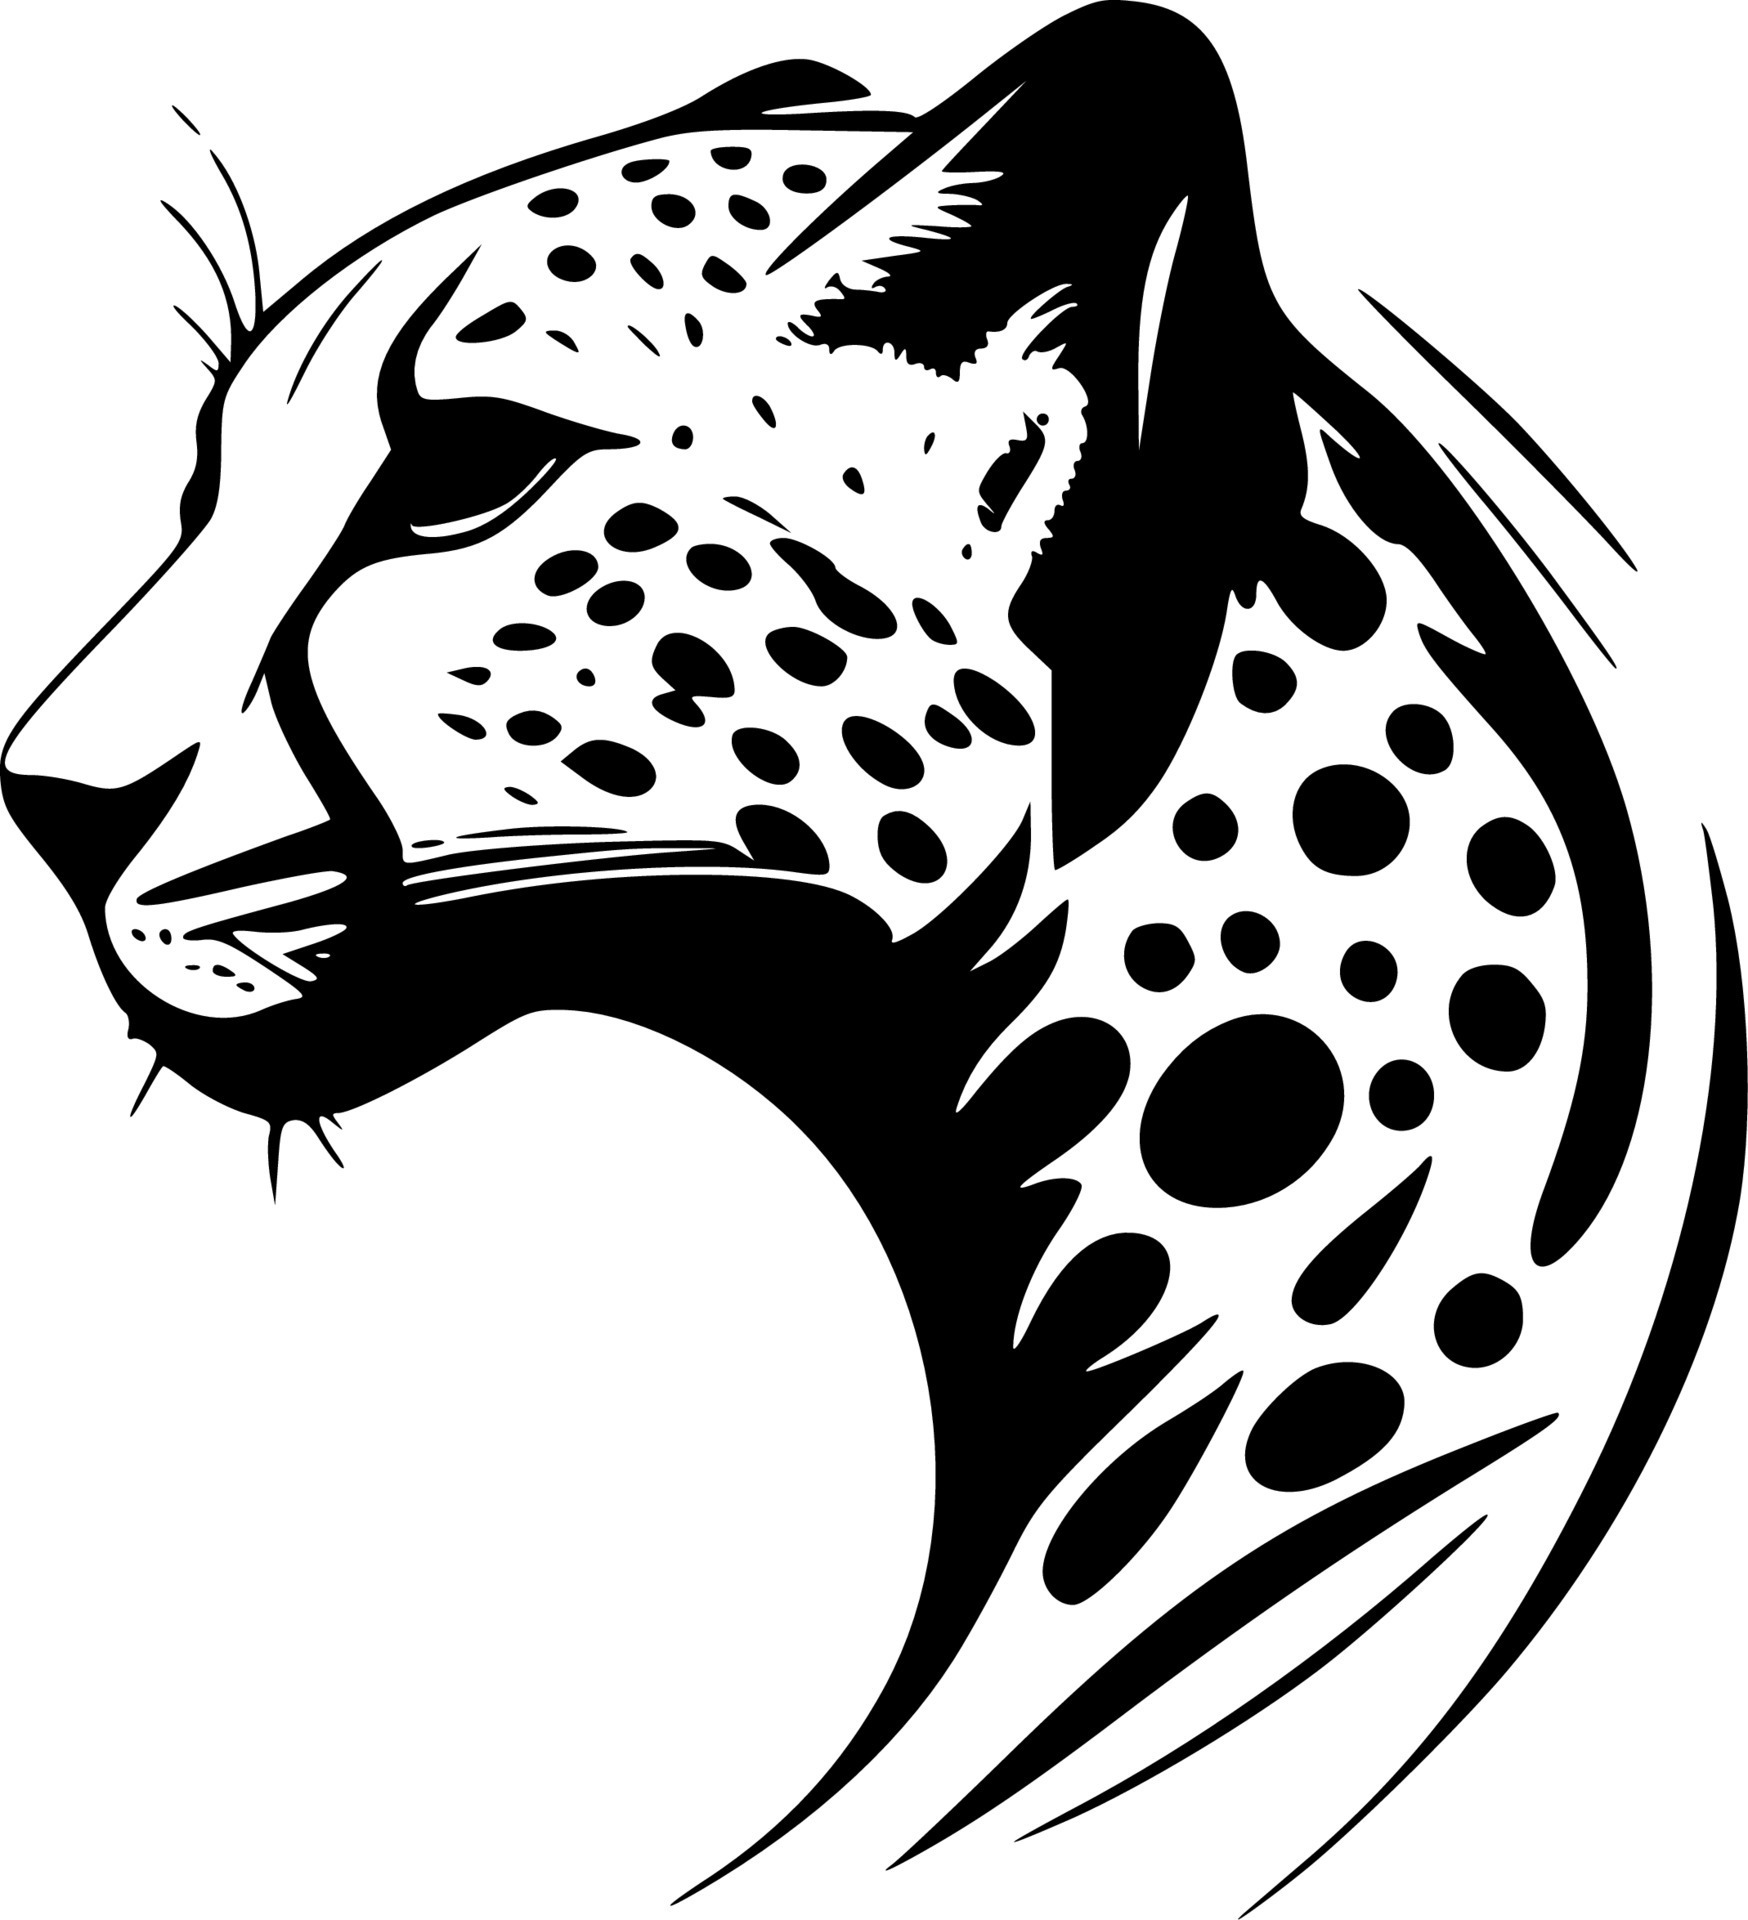 Cheetah animal logo and icon clean flat modern minimalist business